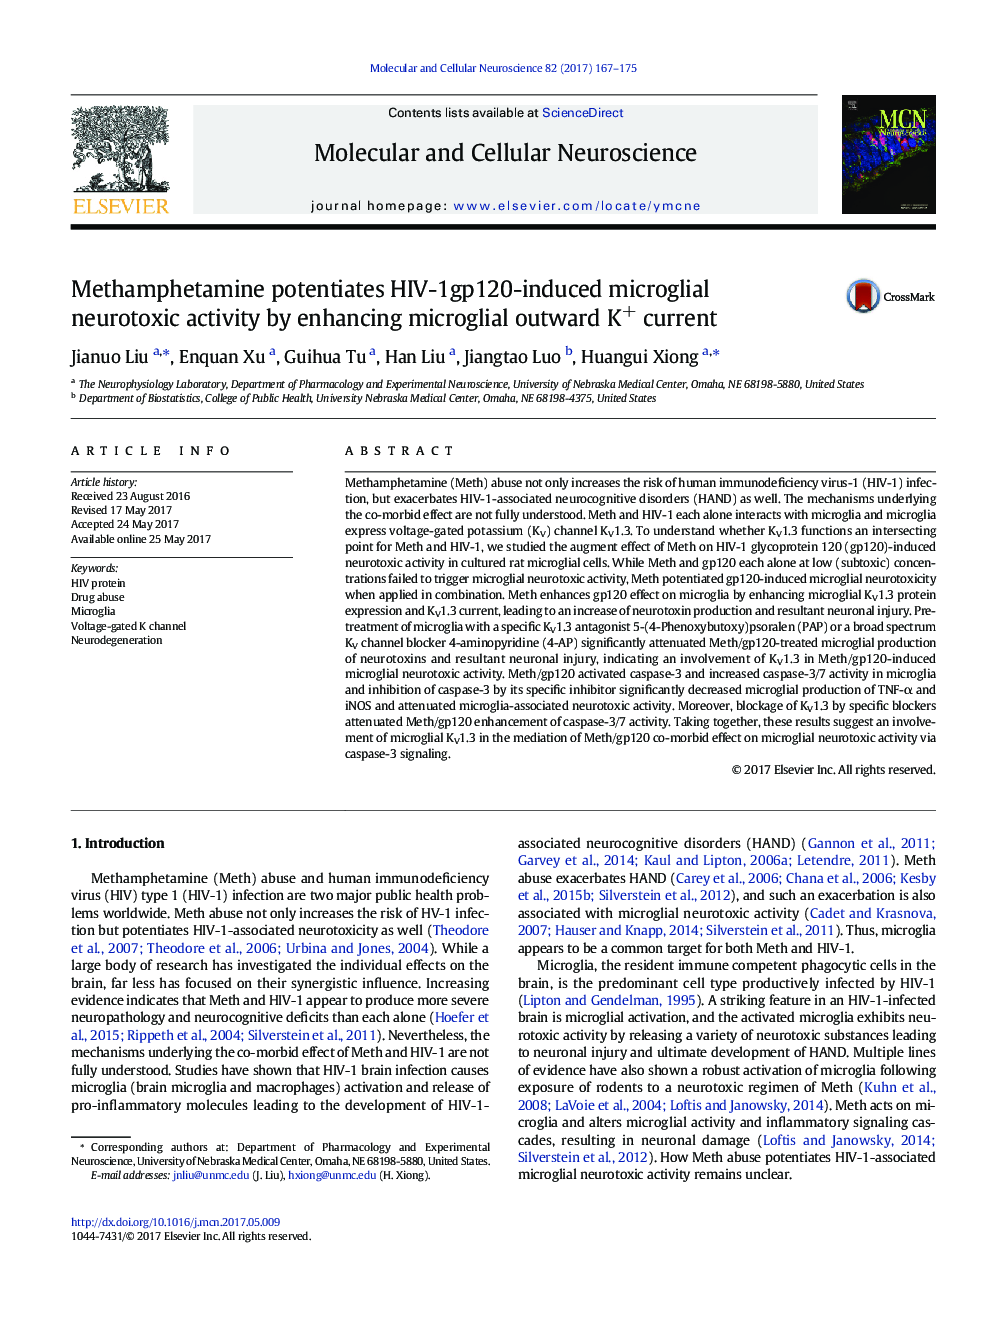 Methamphetamine potentiates HIV-1gp120-induced microglial neurotoxic activity by enhancing microglial outward K+ current